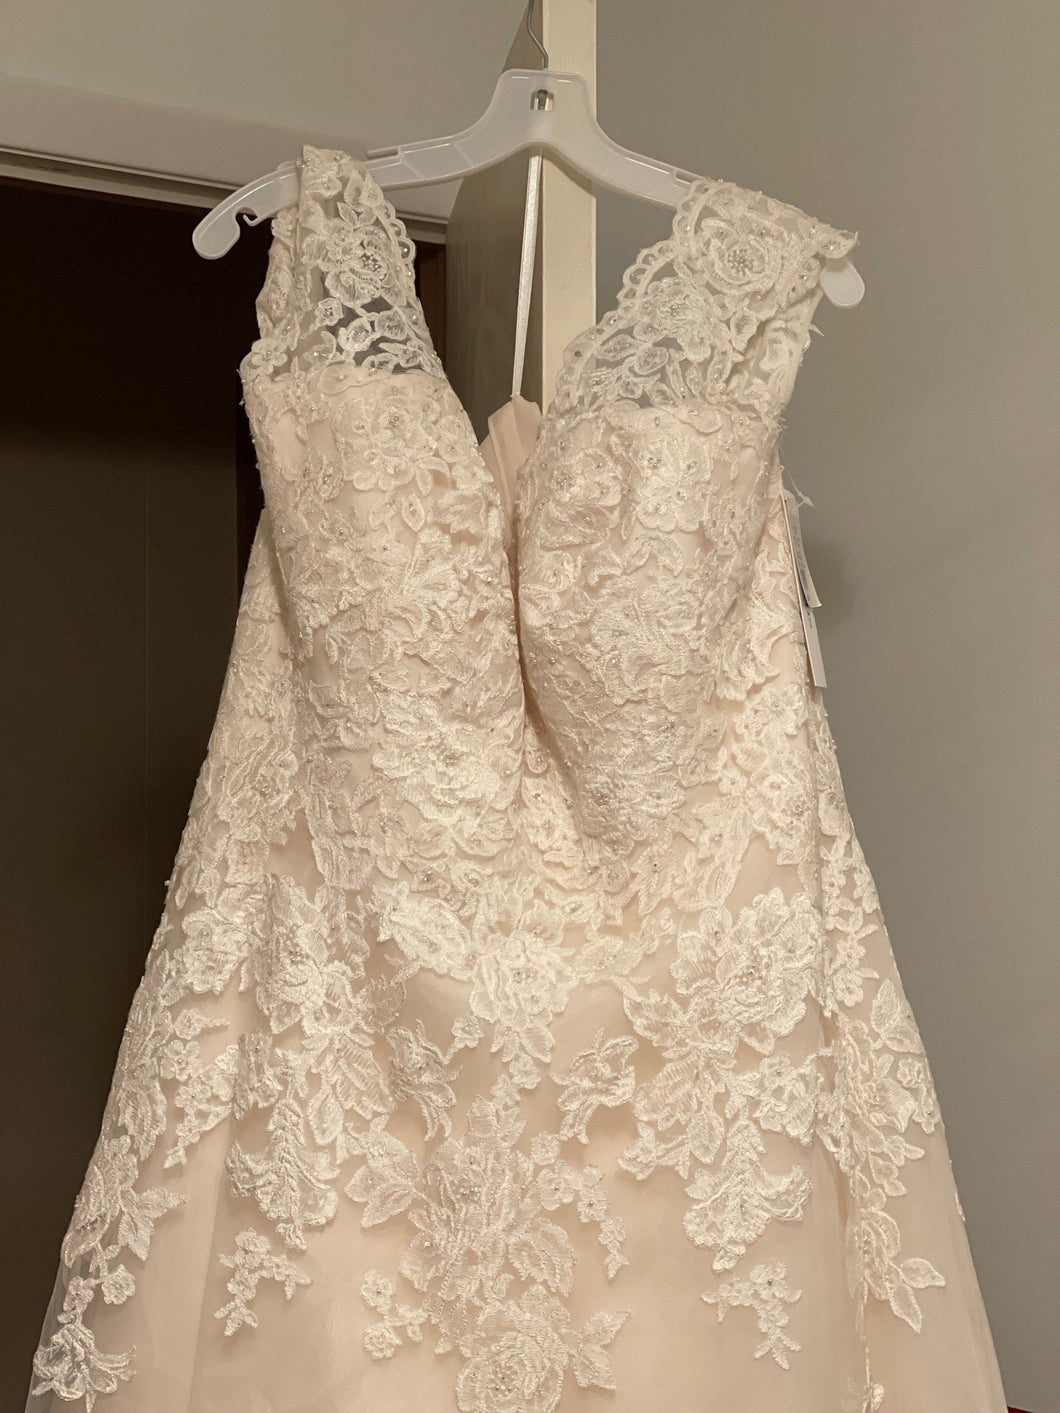 David's Bridal '9WG3850 IVYCHAMP ' wedding dress size-16 NEW